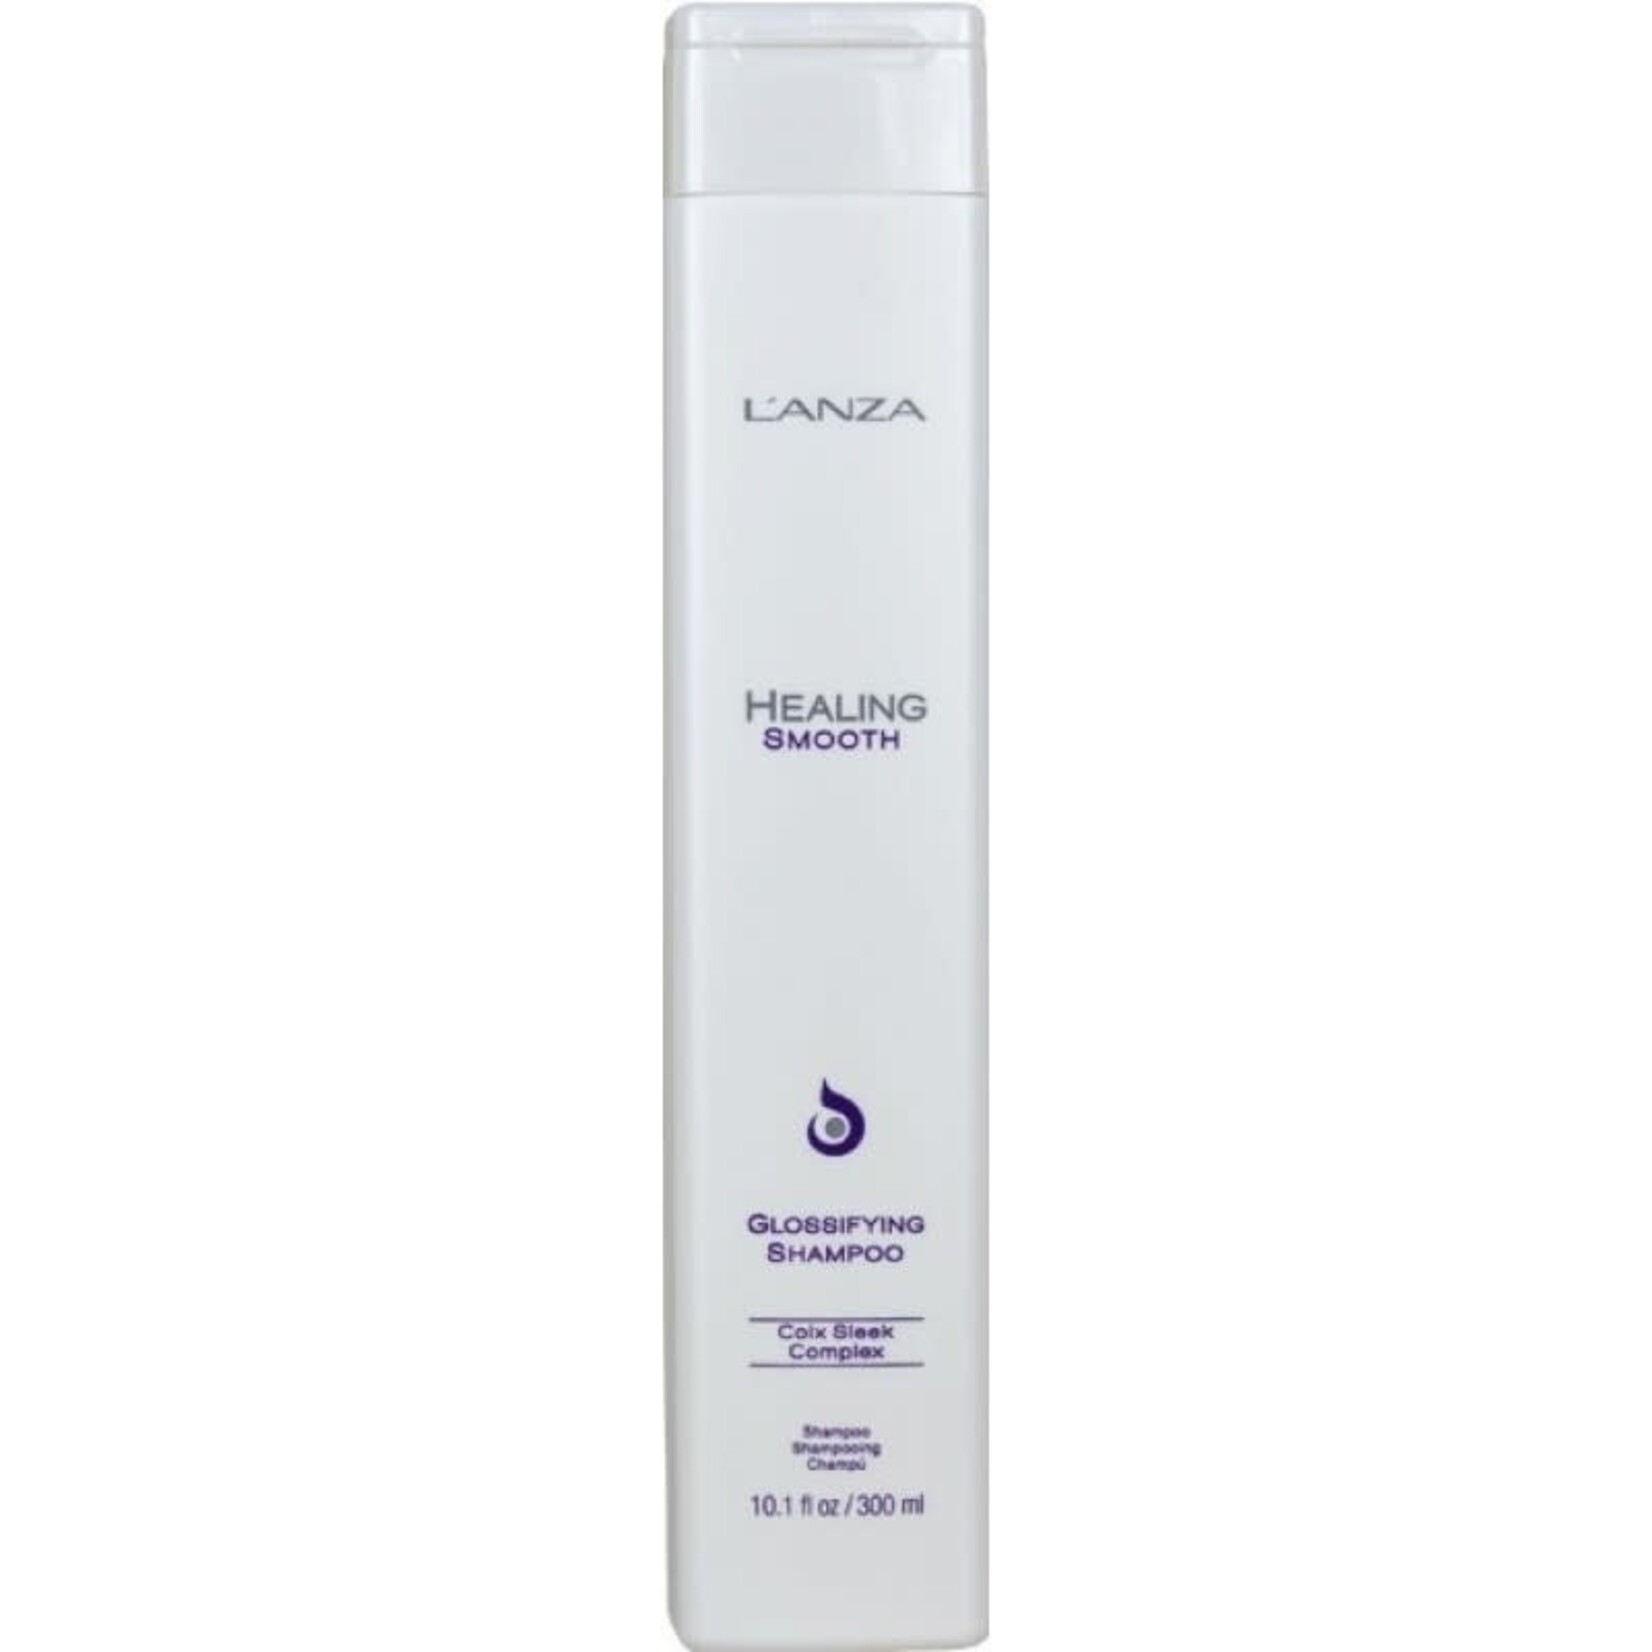 L'Anza L'Anza - Healing Smooth - Glossifying Shampoo 300ml